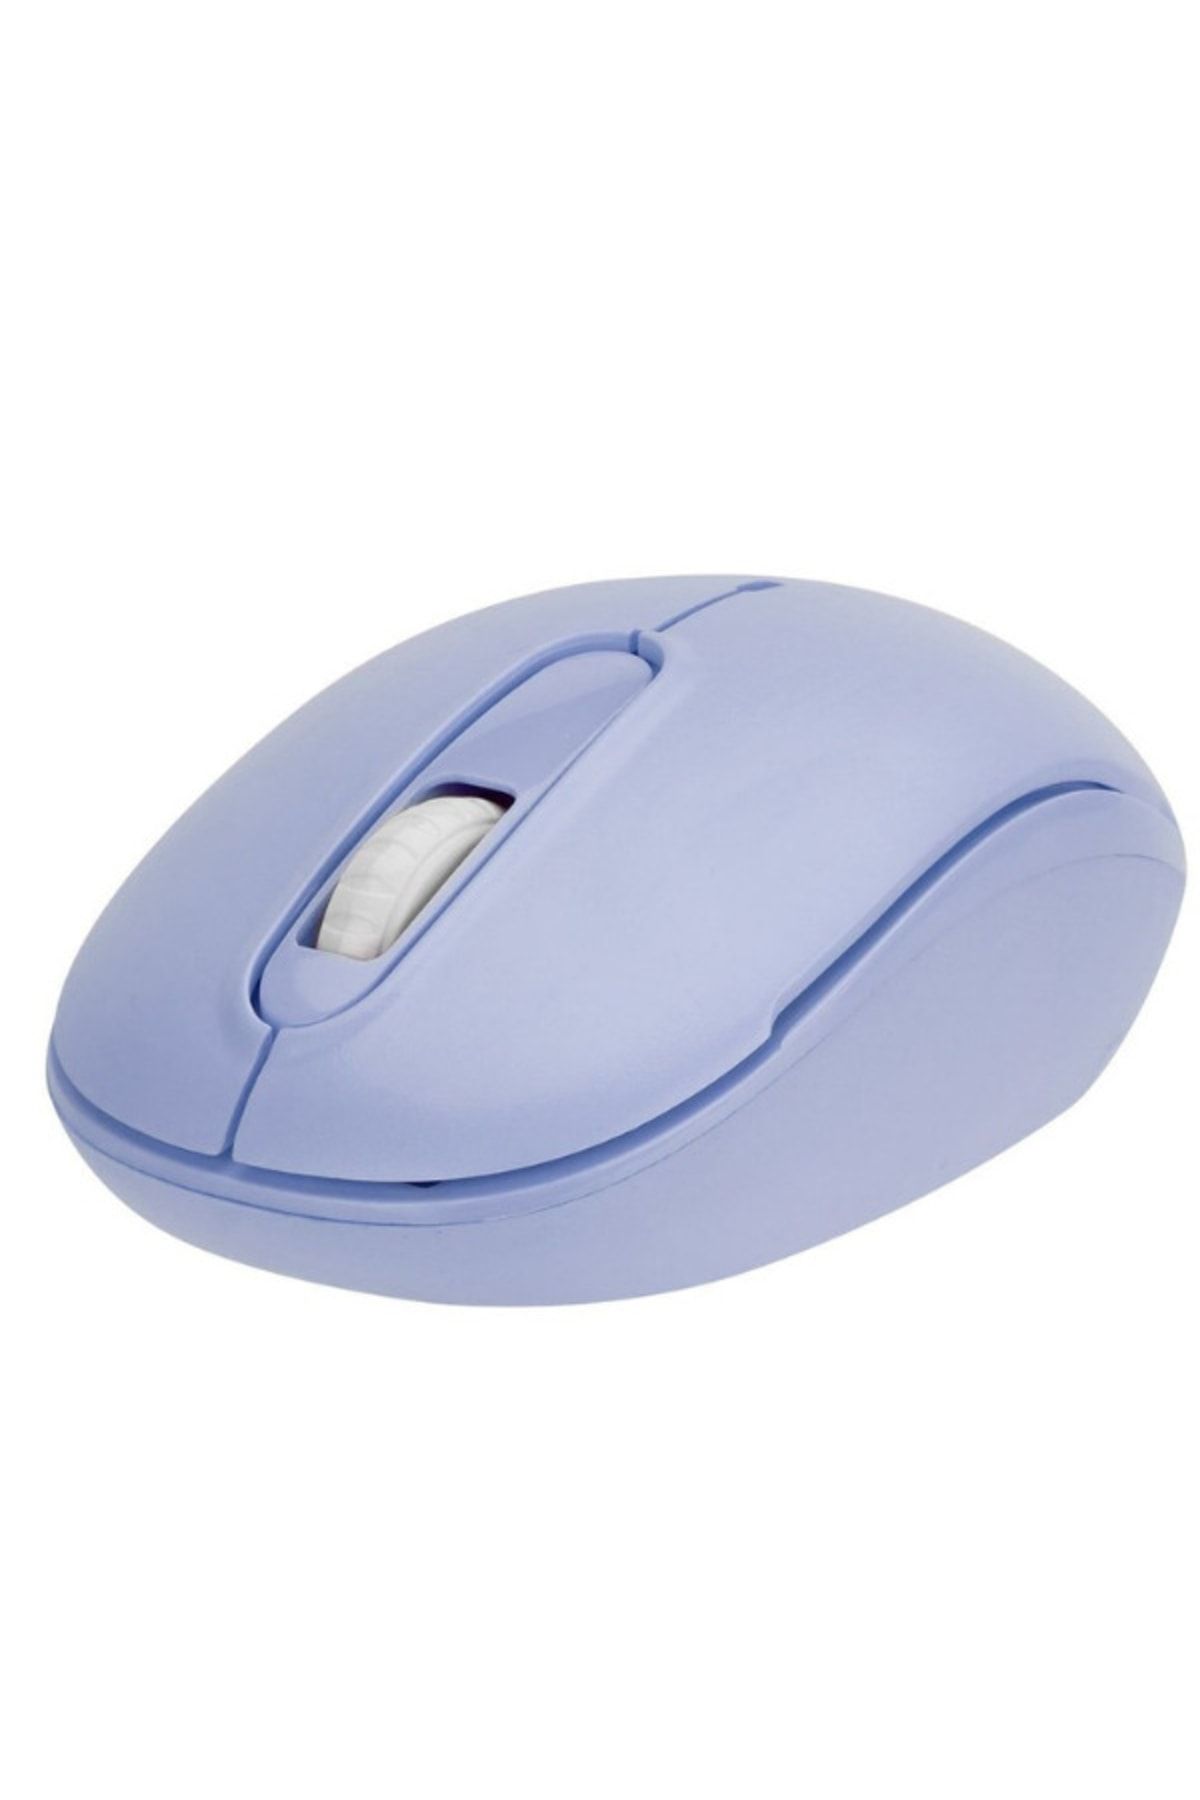 Everest Smw-666 Mavi Usb 2.4ghz Optik Wireless Mouse